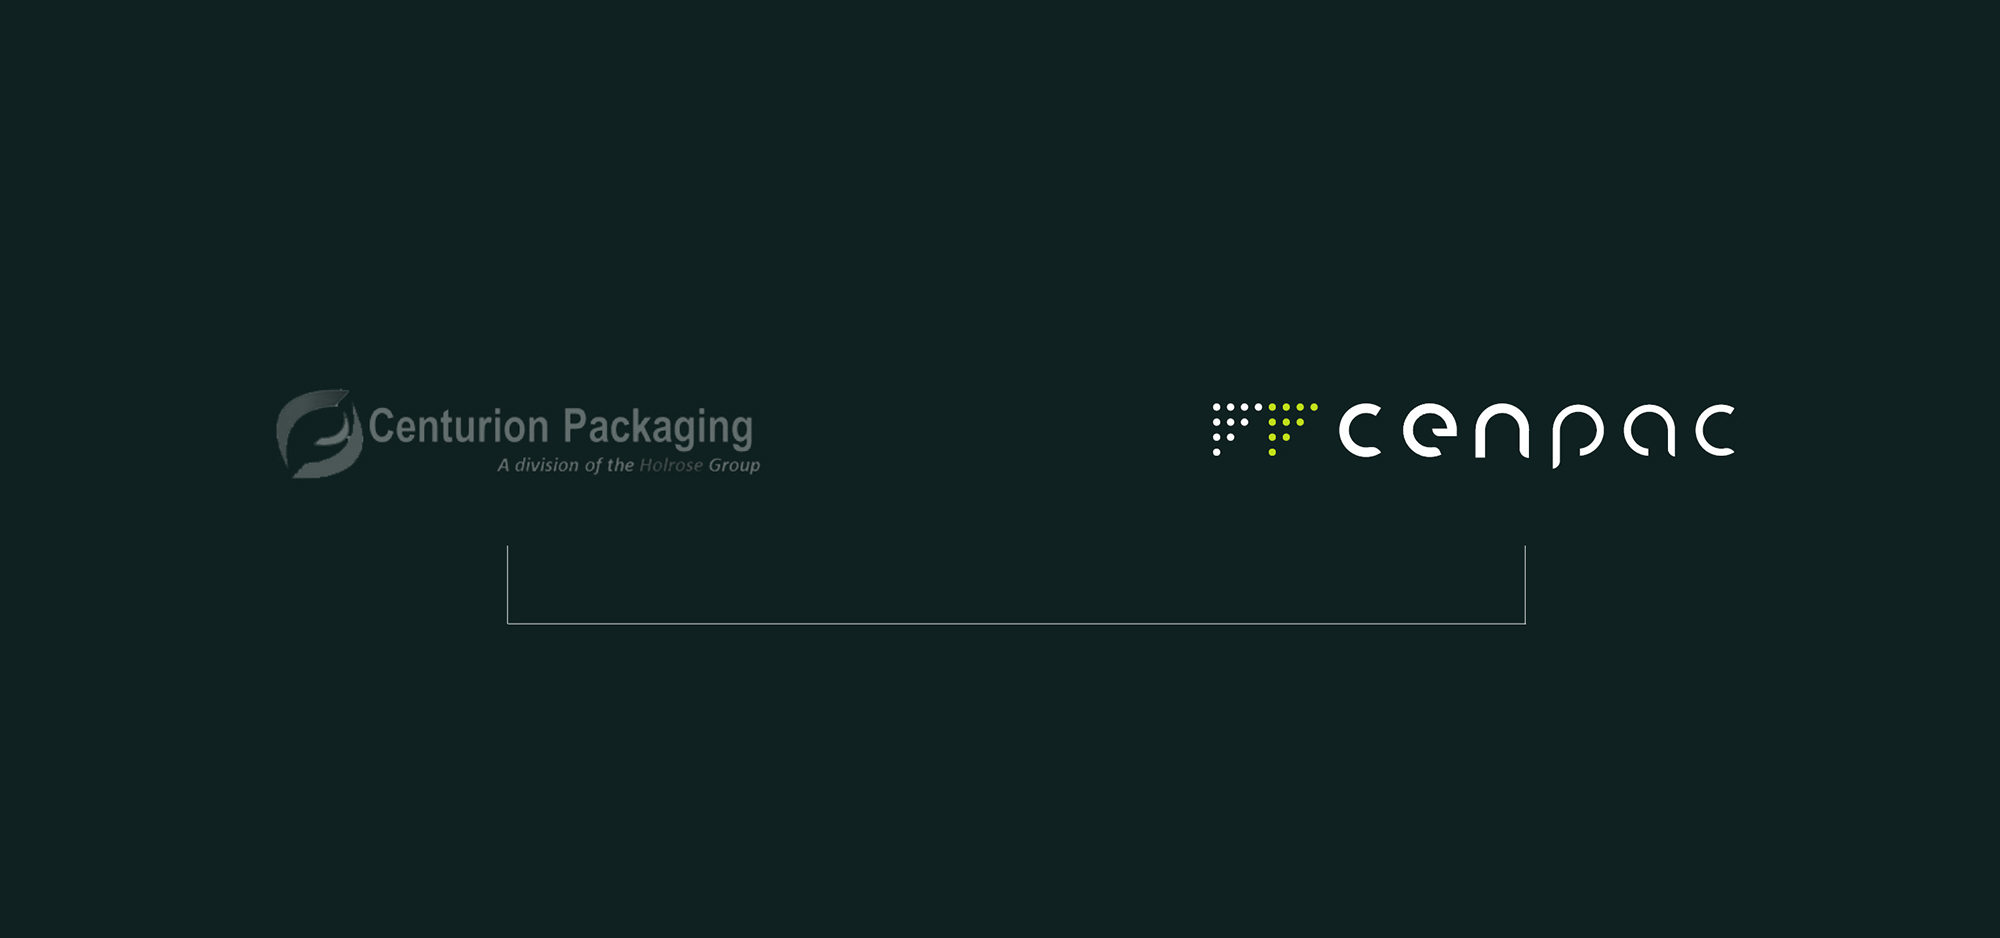 Old Centurion Packaging logo design against the new rebranded Cenpac logo design